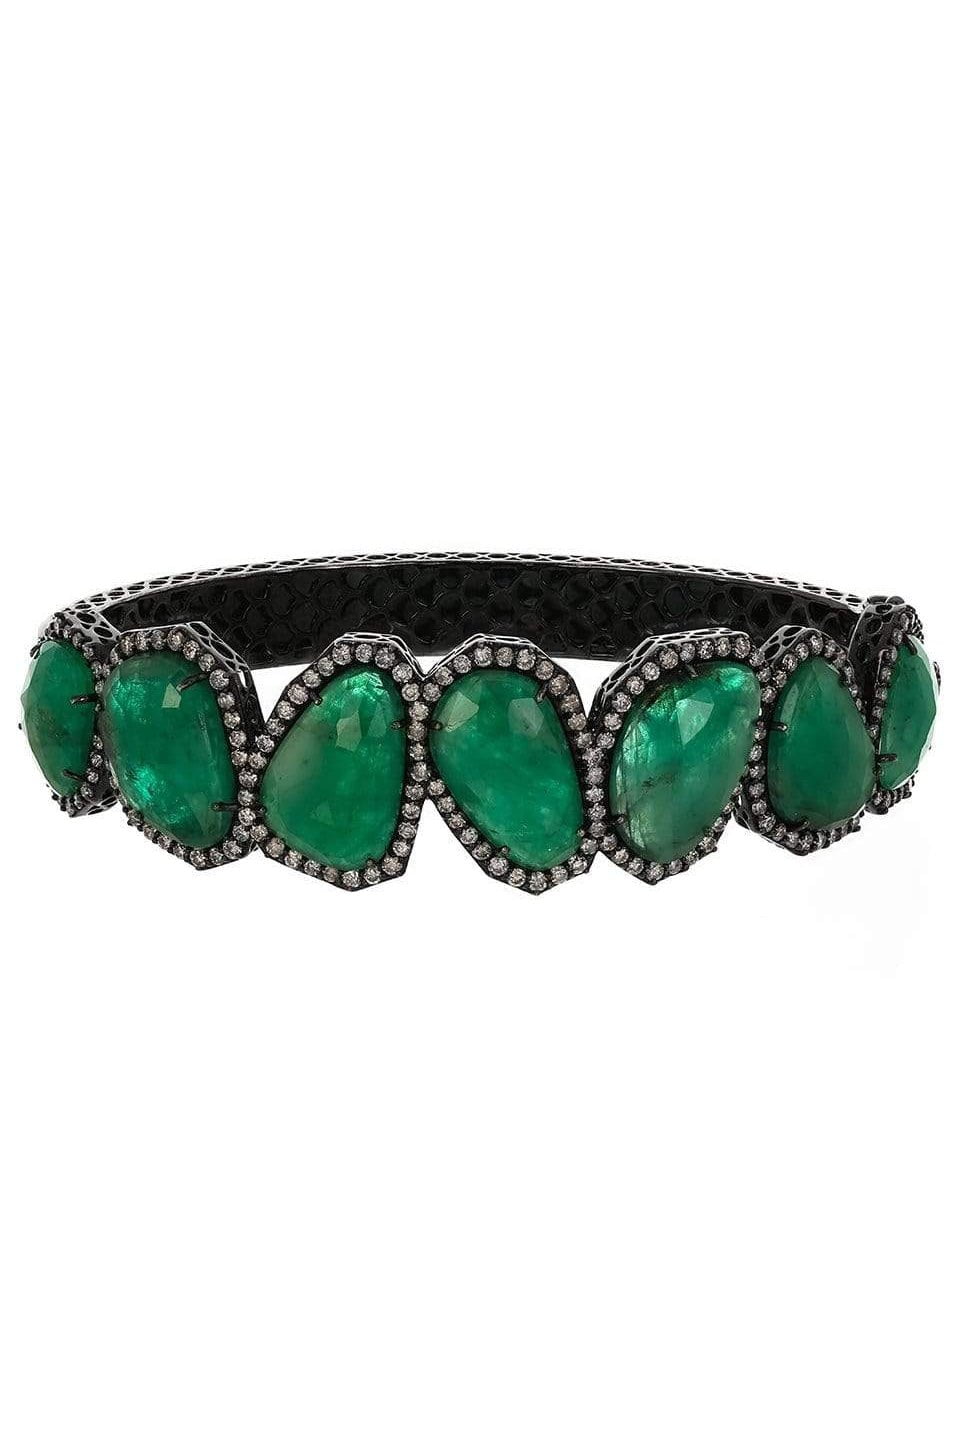 SUTRA-Sliced Emerald and Diamond-Bracelet-BLACK GOLD